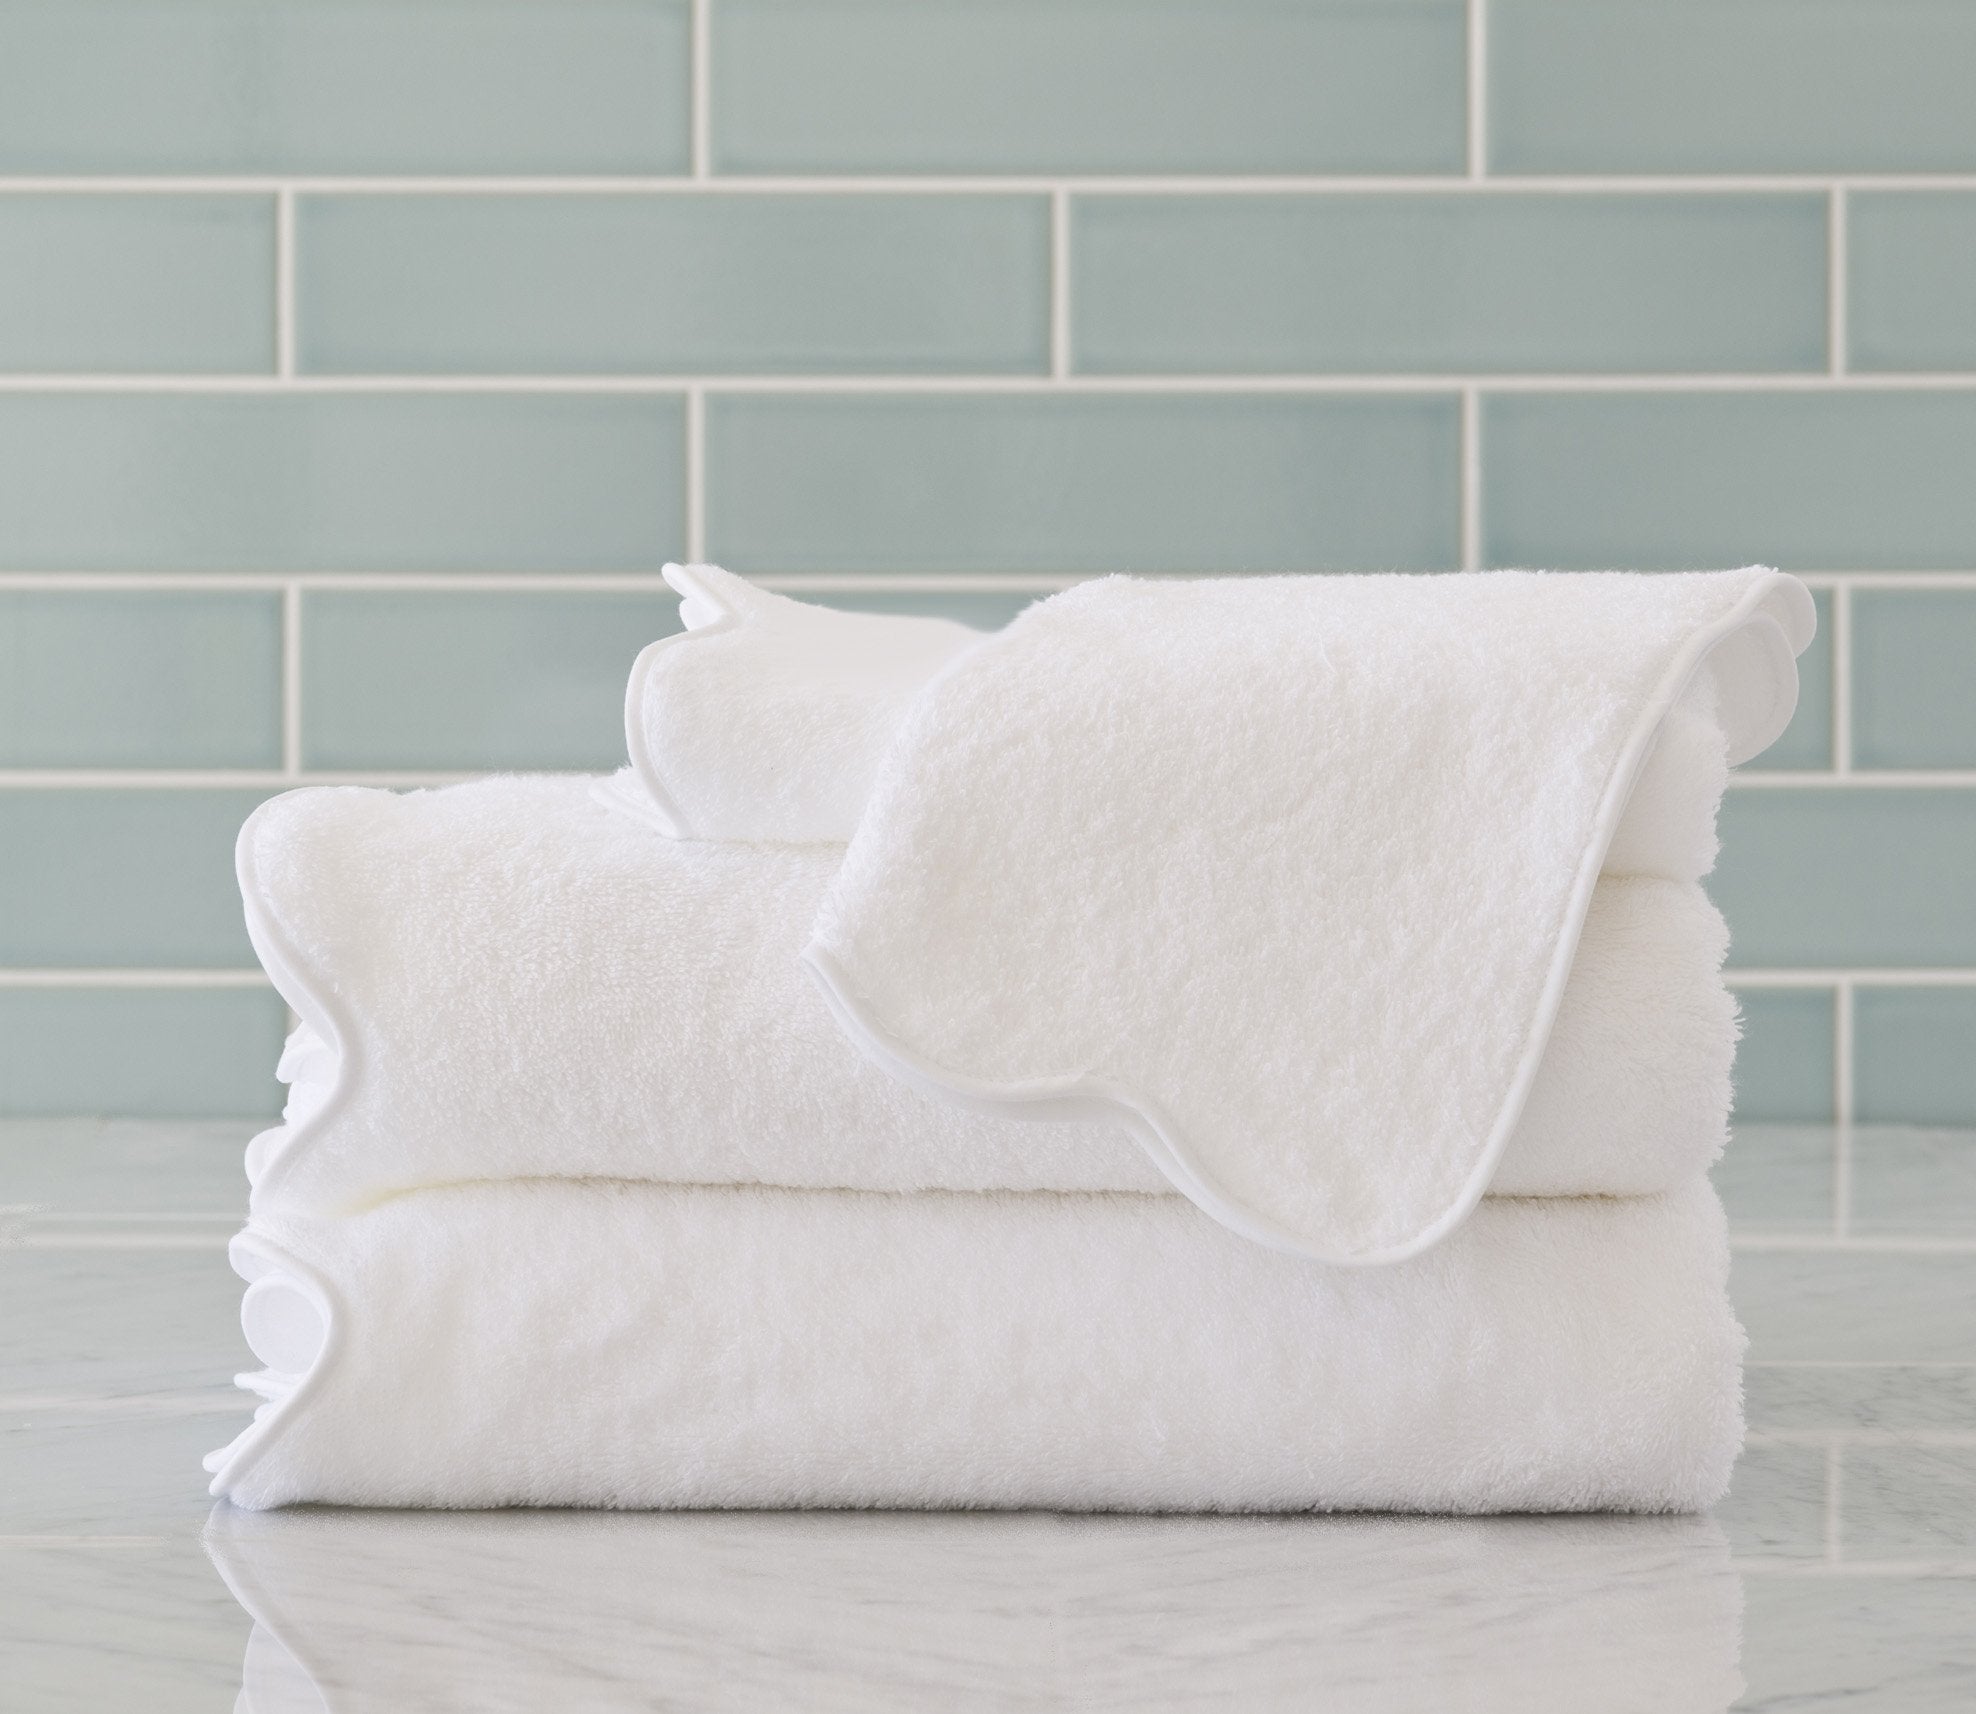 Scallop Bath Sheet White Product Image 1